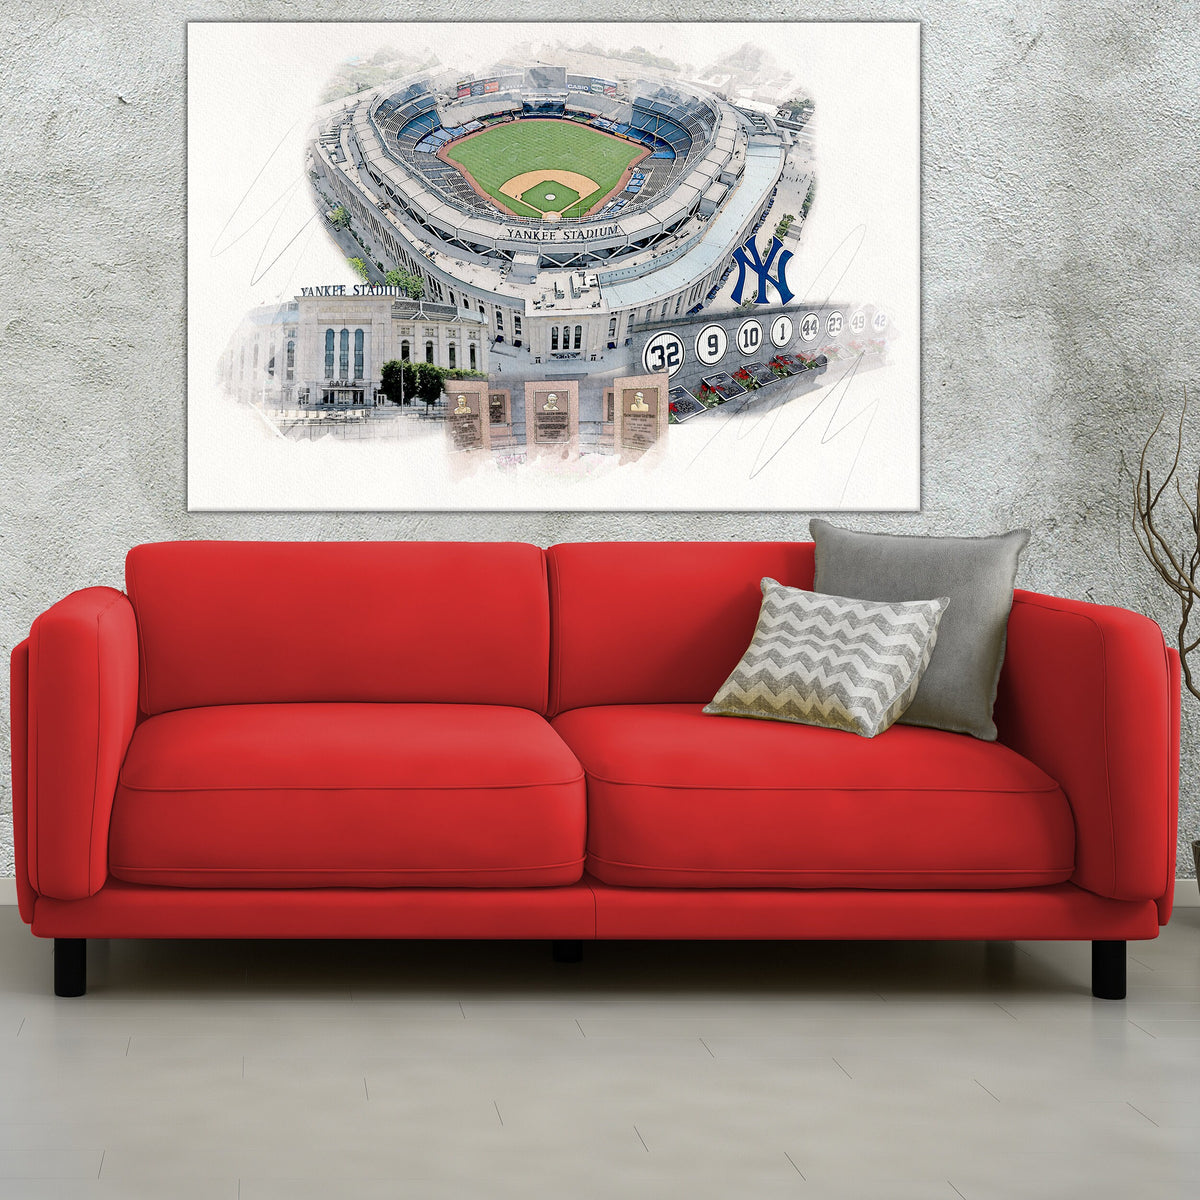 New York Yankees Stadium Baseball Framed Canvas Home Decor Wall Art  Multiple Choices 1 3 4 5 Panels